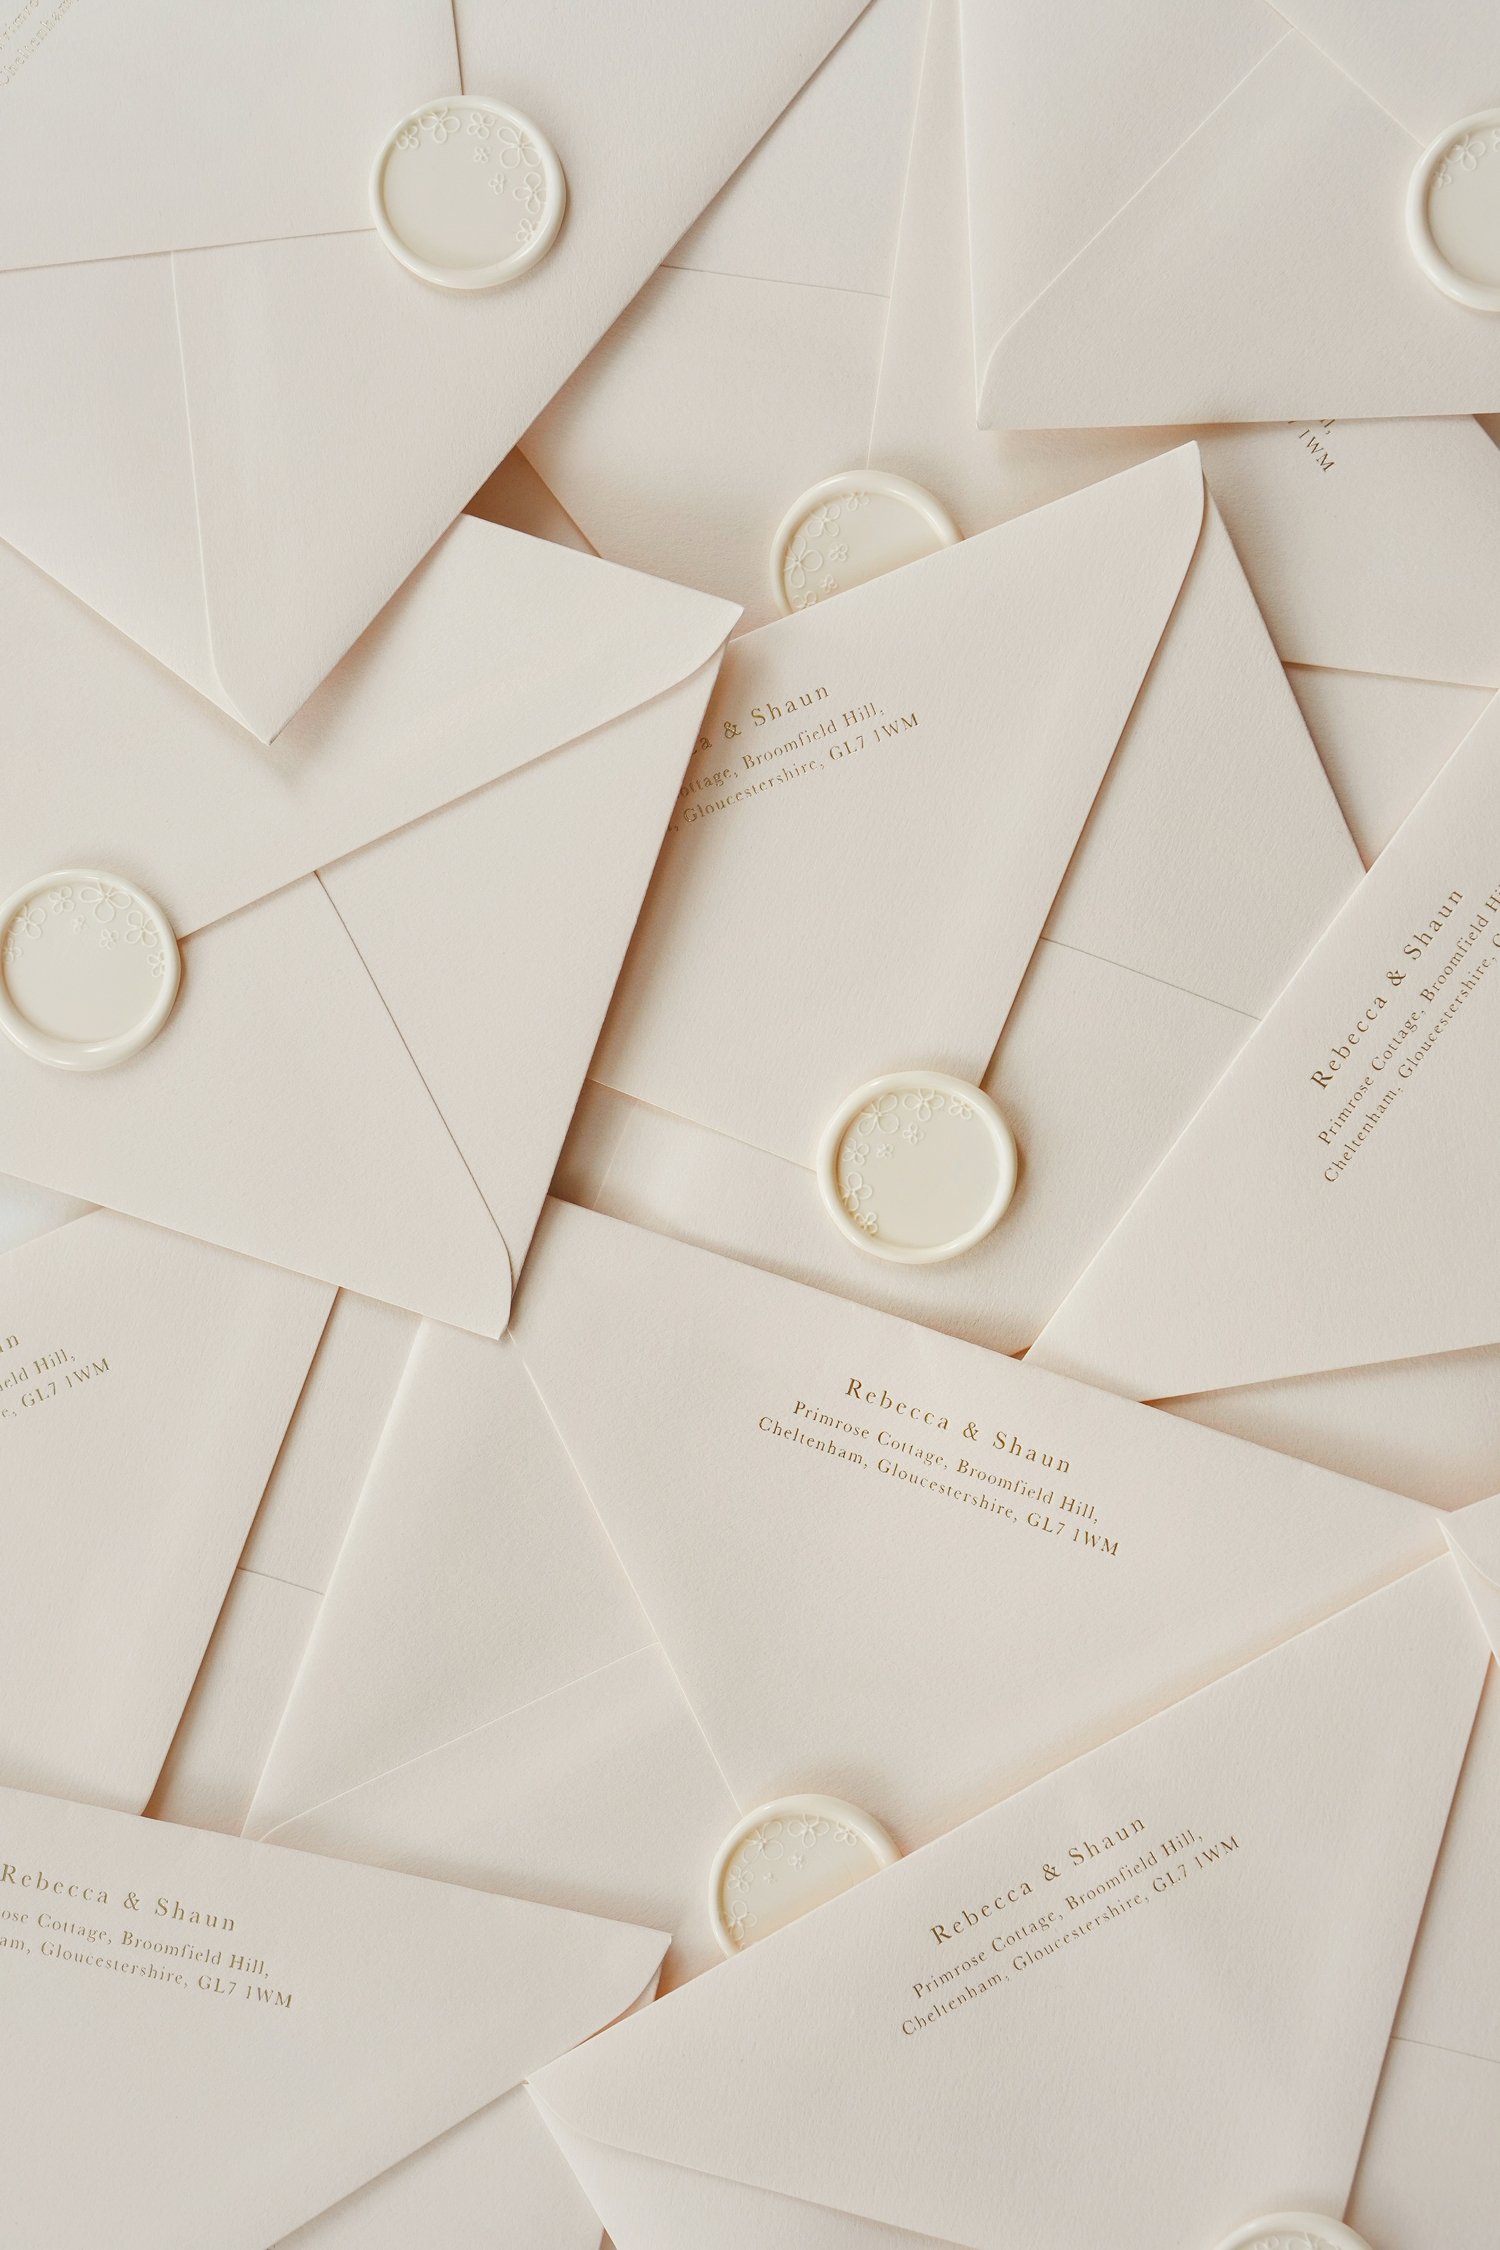 Gable&Grain_Wedding-Stationery_Anna_Envelopes-Wax-Seals_1_web.jpg